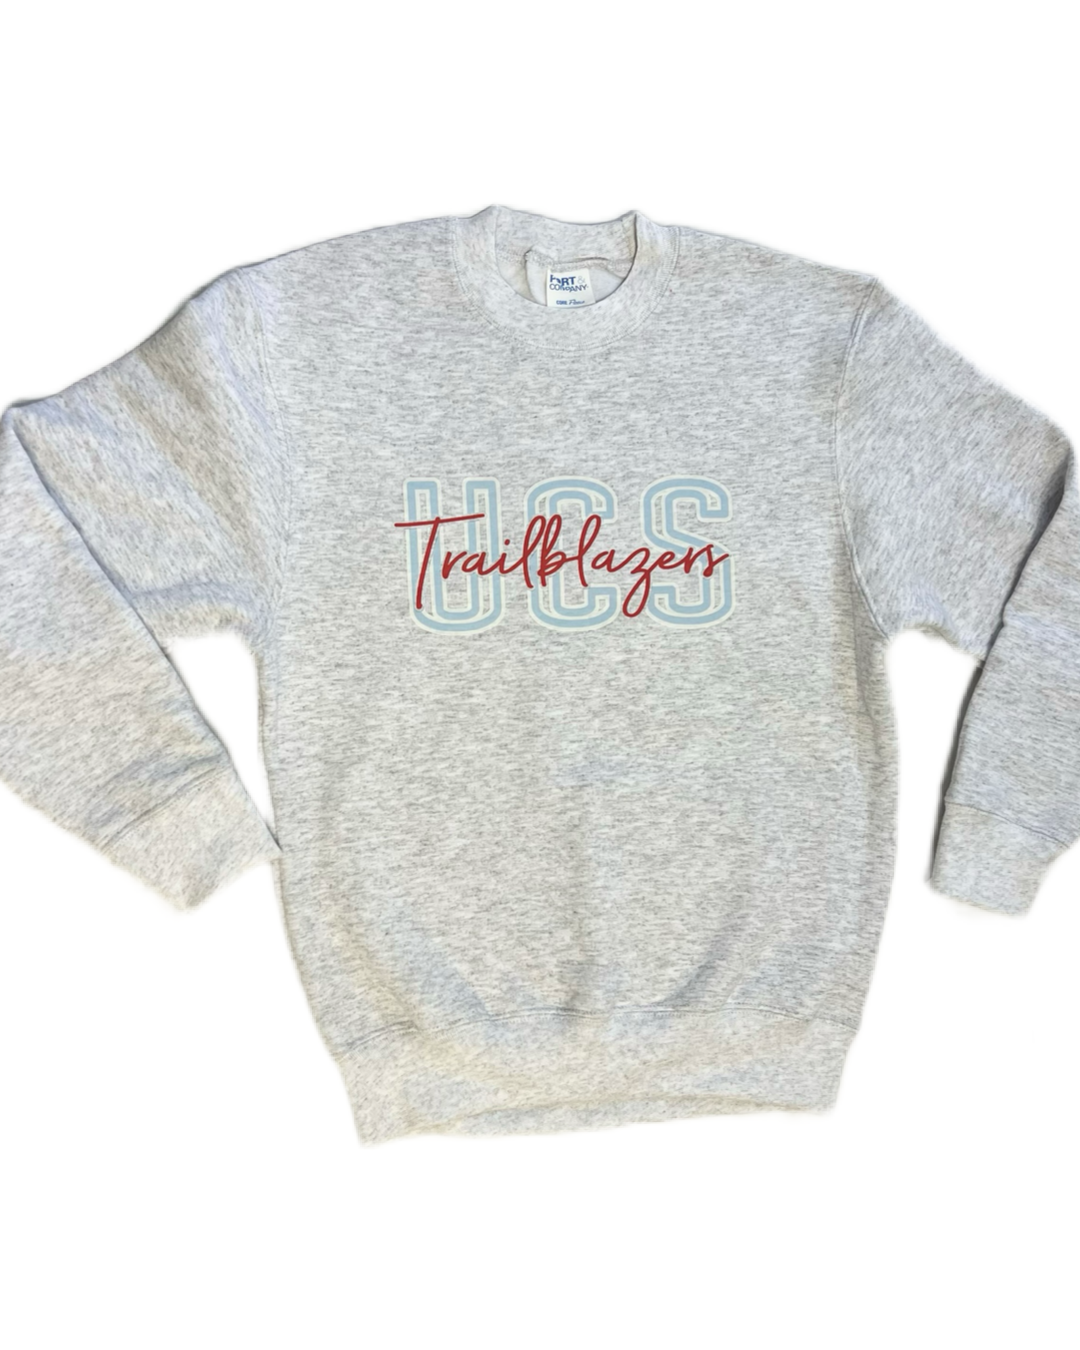 UCS Trailblazer Crewneck Sweatshirt, Youth + Adult Sizes